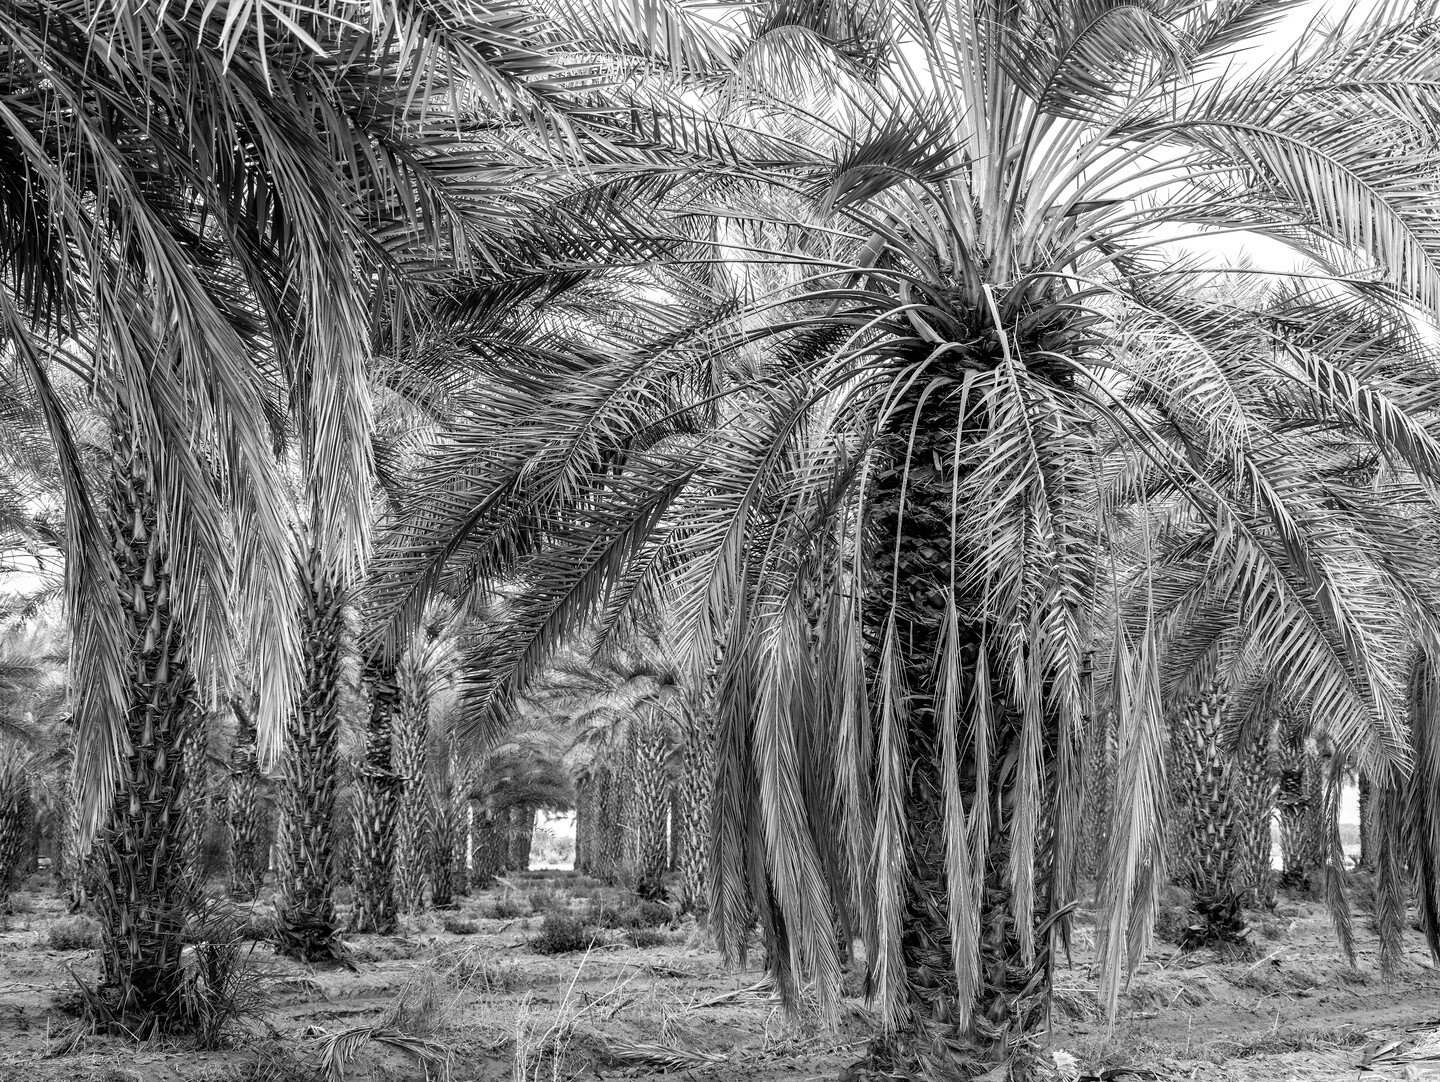 Date Palm Grove
#laquinta 
#california 
#californiaadventure 
#palmsprings 
#palm 
#palmtrees